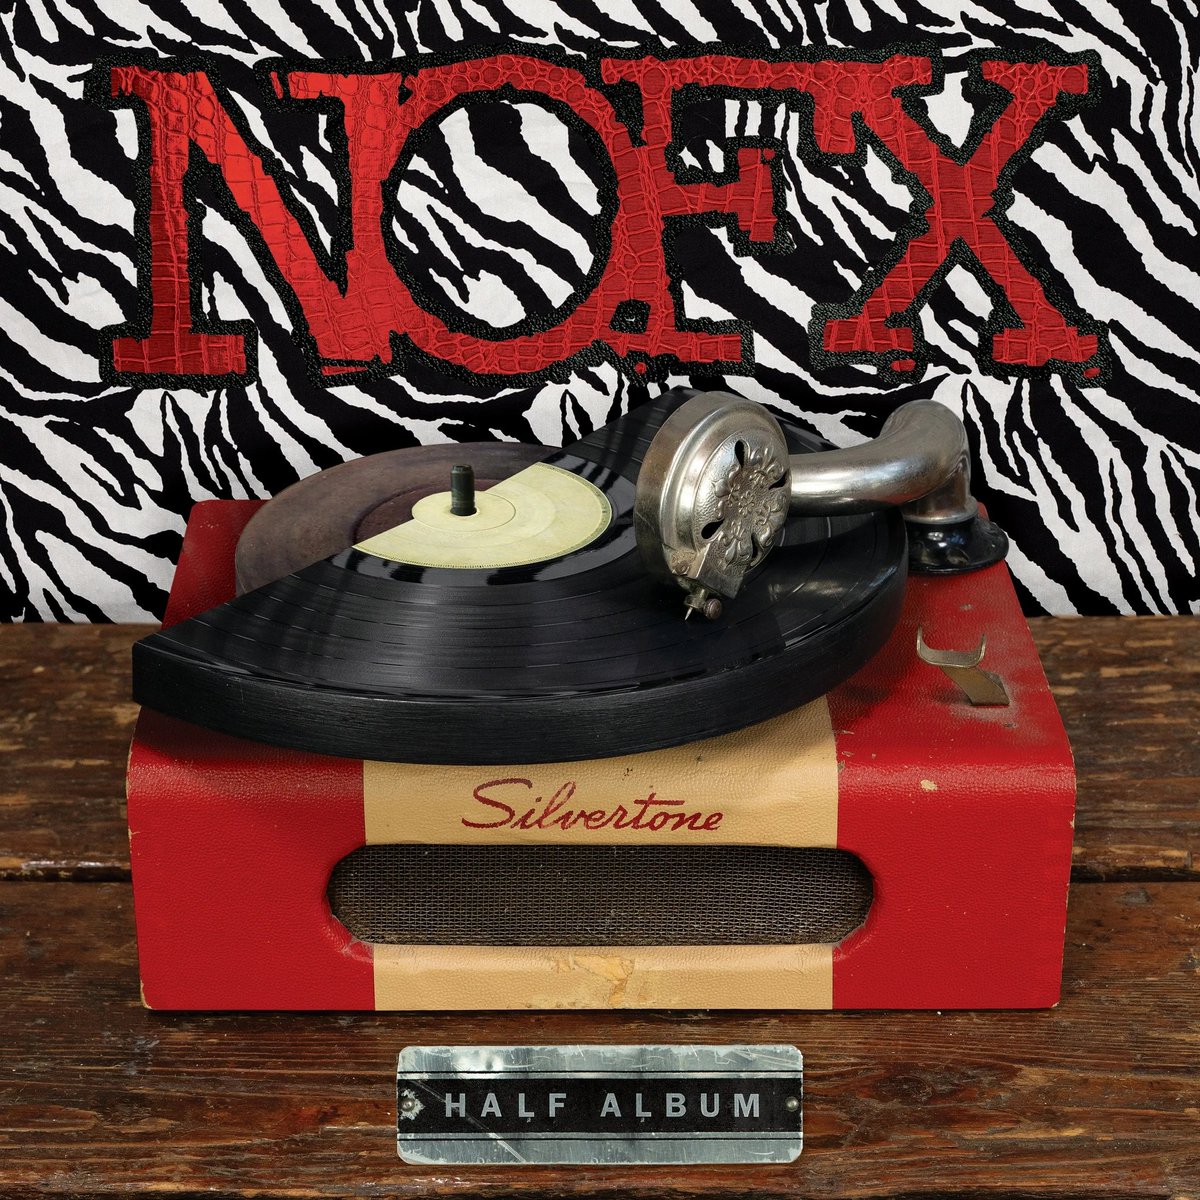 NOFX - Half Album [EP] (2024)
Punk 
USA
#rocknewsreleases #rocknewsrelease #rocknews #rock #rnr #rn #punk #punkrock #nofx 

@NOFXband